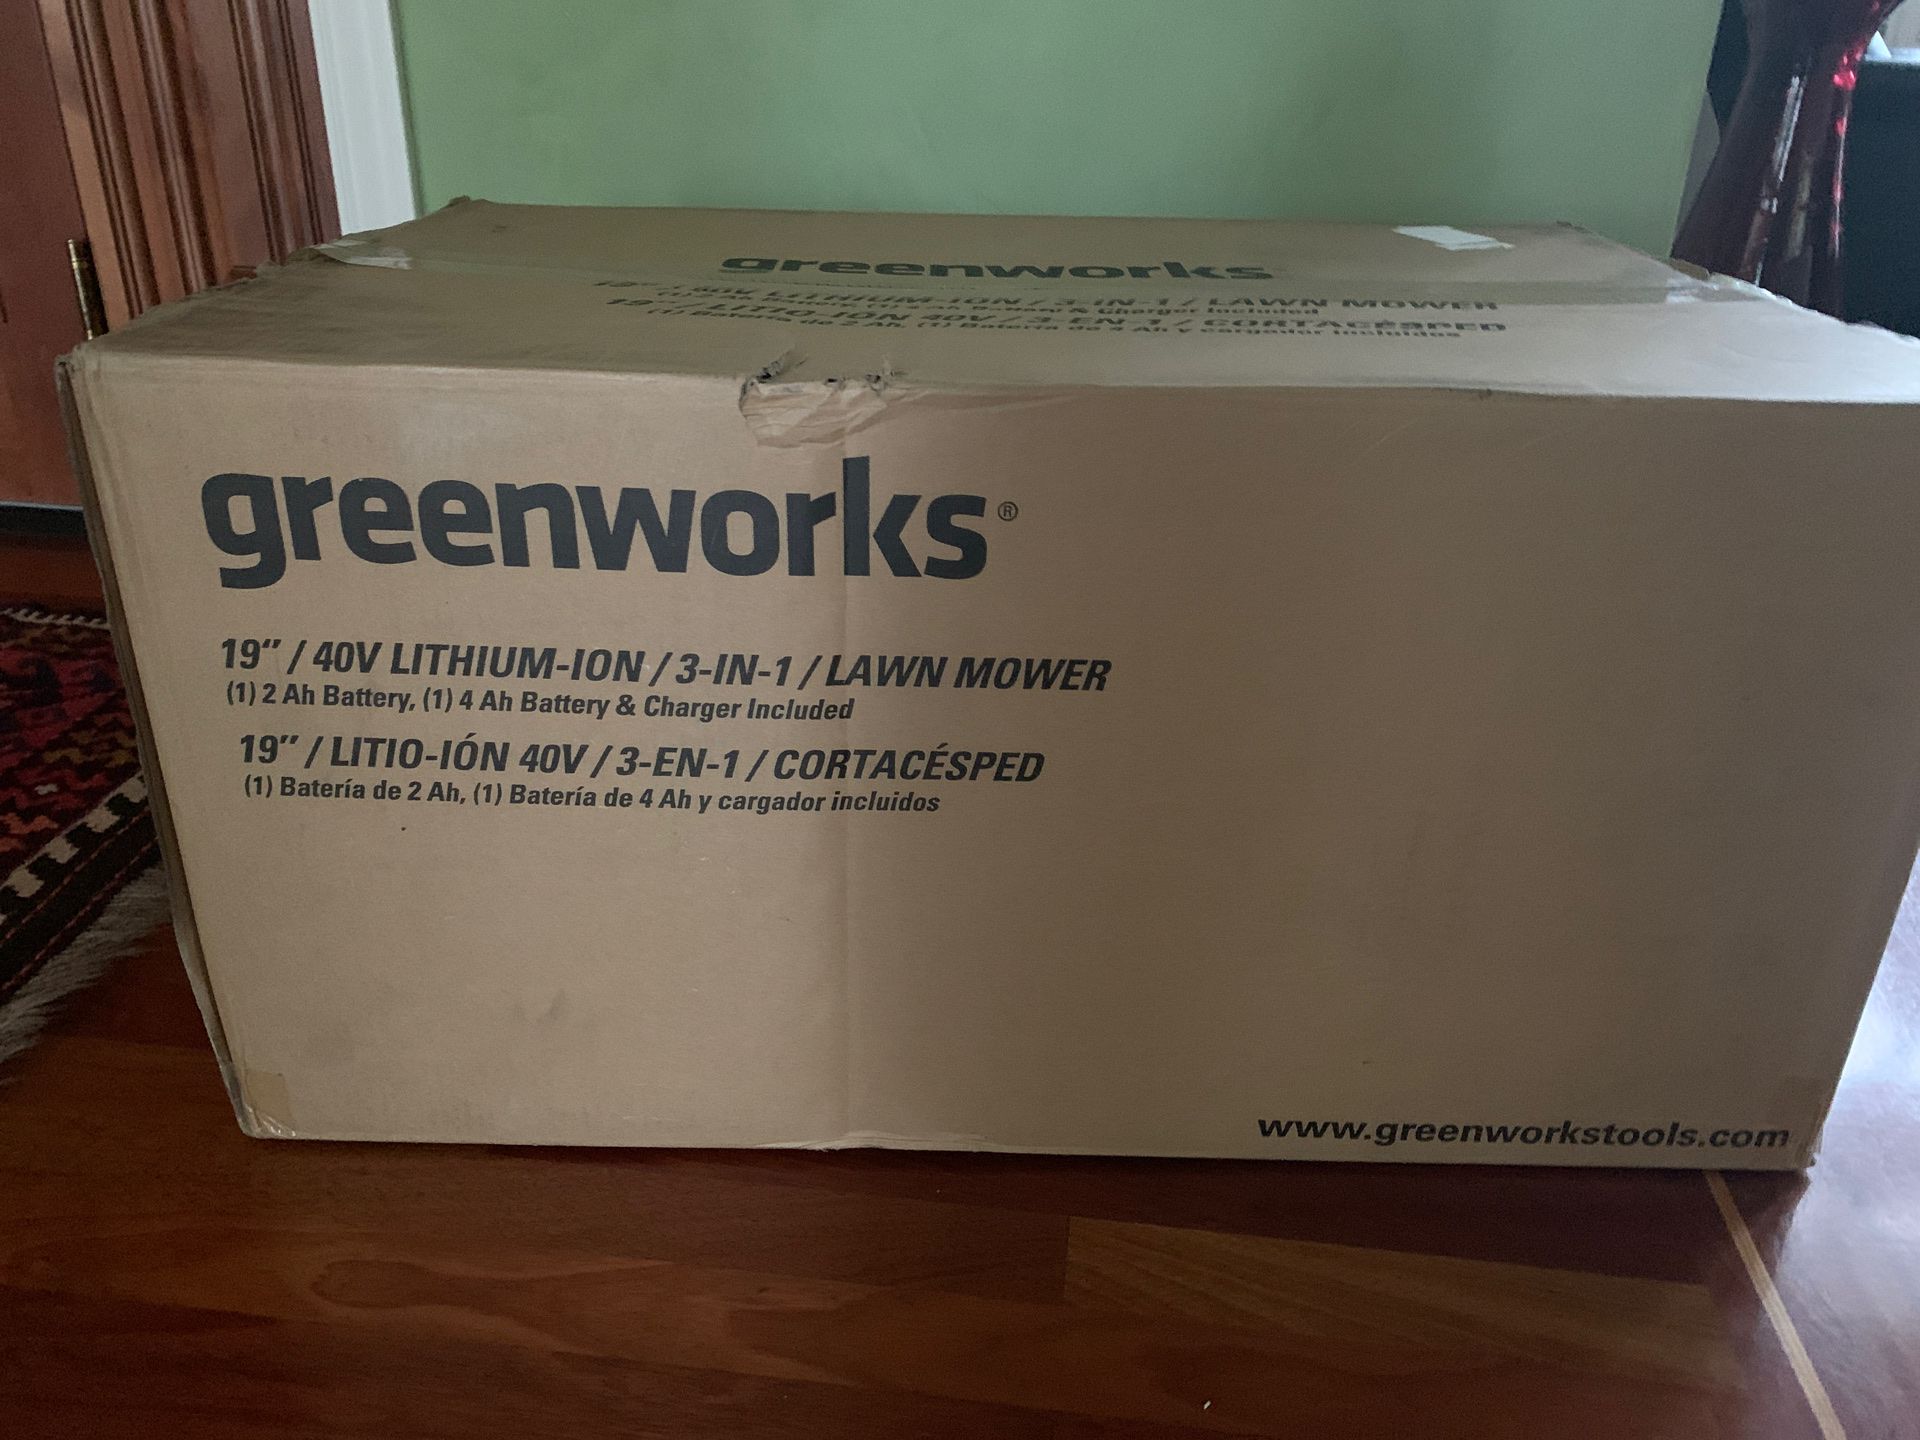 Green works cordless lawnmower w/battery